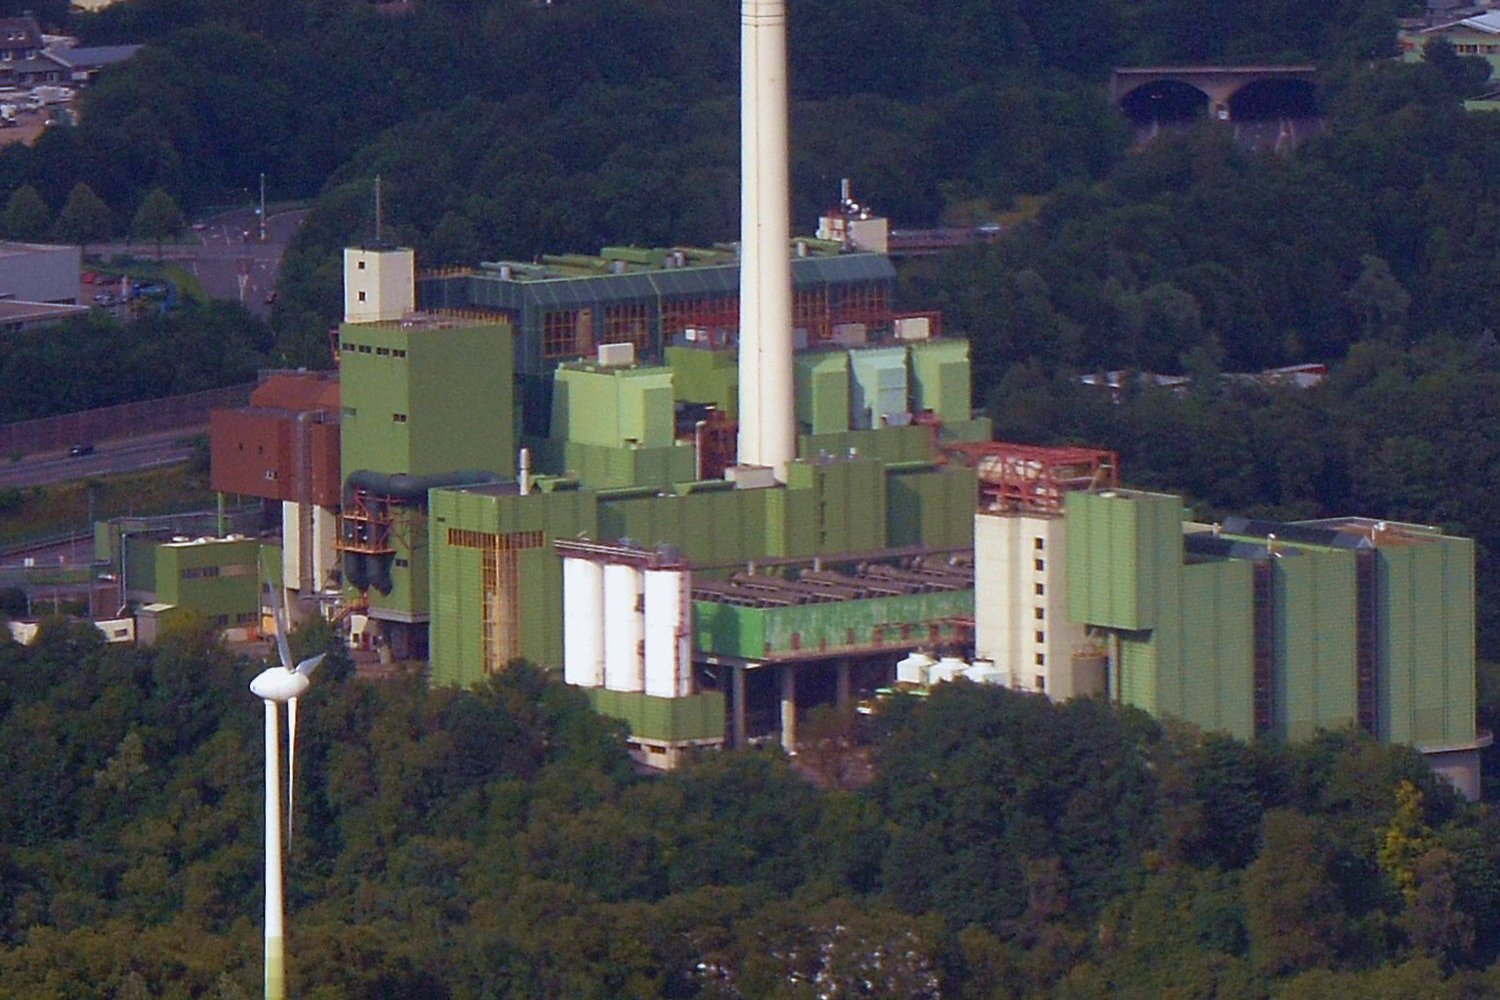 Müllverbrennungsanlage Wuppertal (c) Krd auf commons.wikimedia.org / CC-SA-BY 4.0